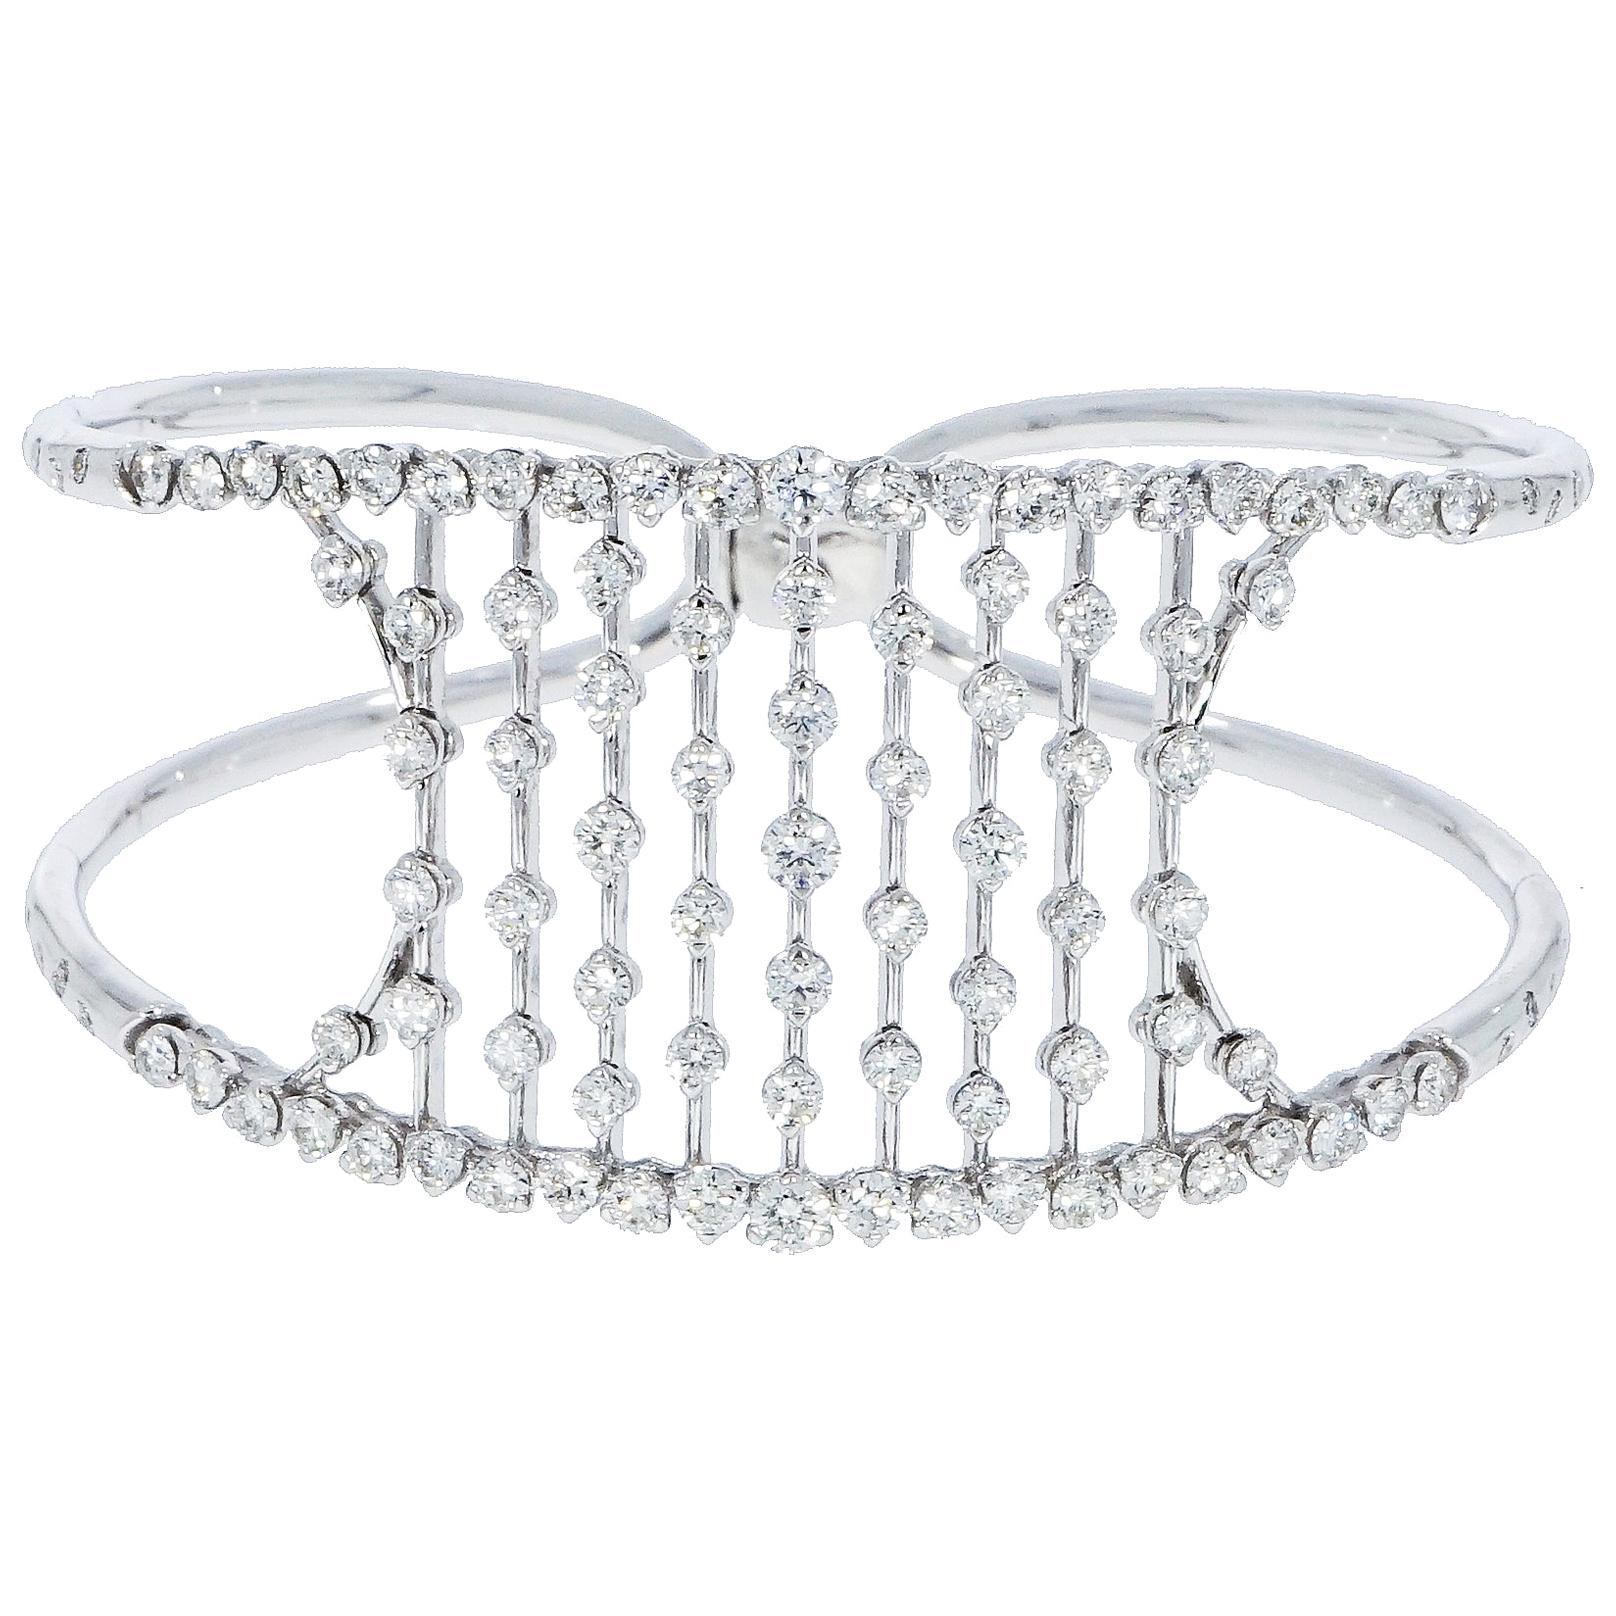  White Gold Diamond Cuff  Bracelet by Casato